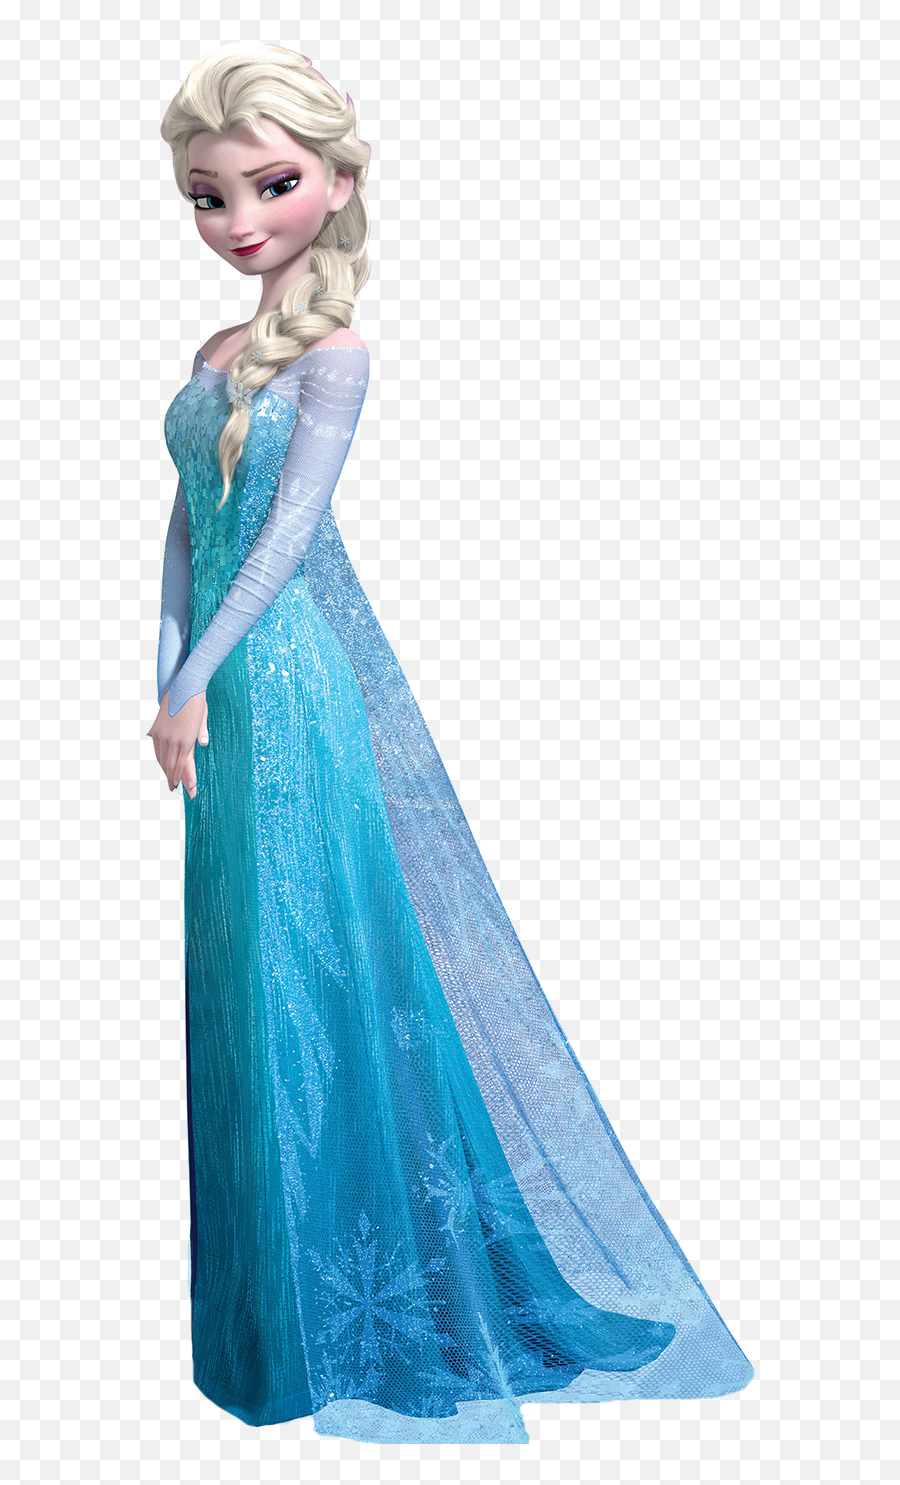 The Heroes And The Villains Wiki - Elsa Frozen Png Emoji,Frozen Fever Emoji